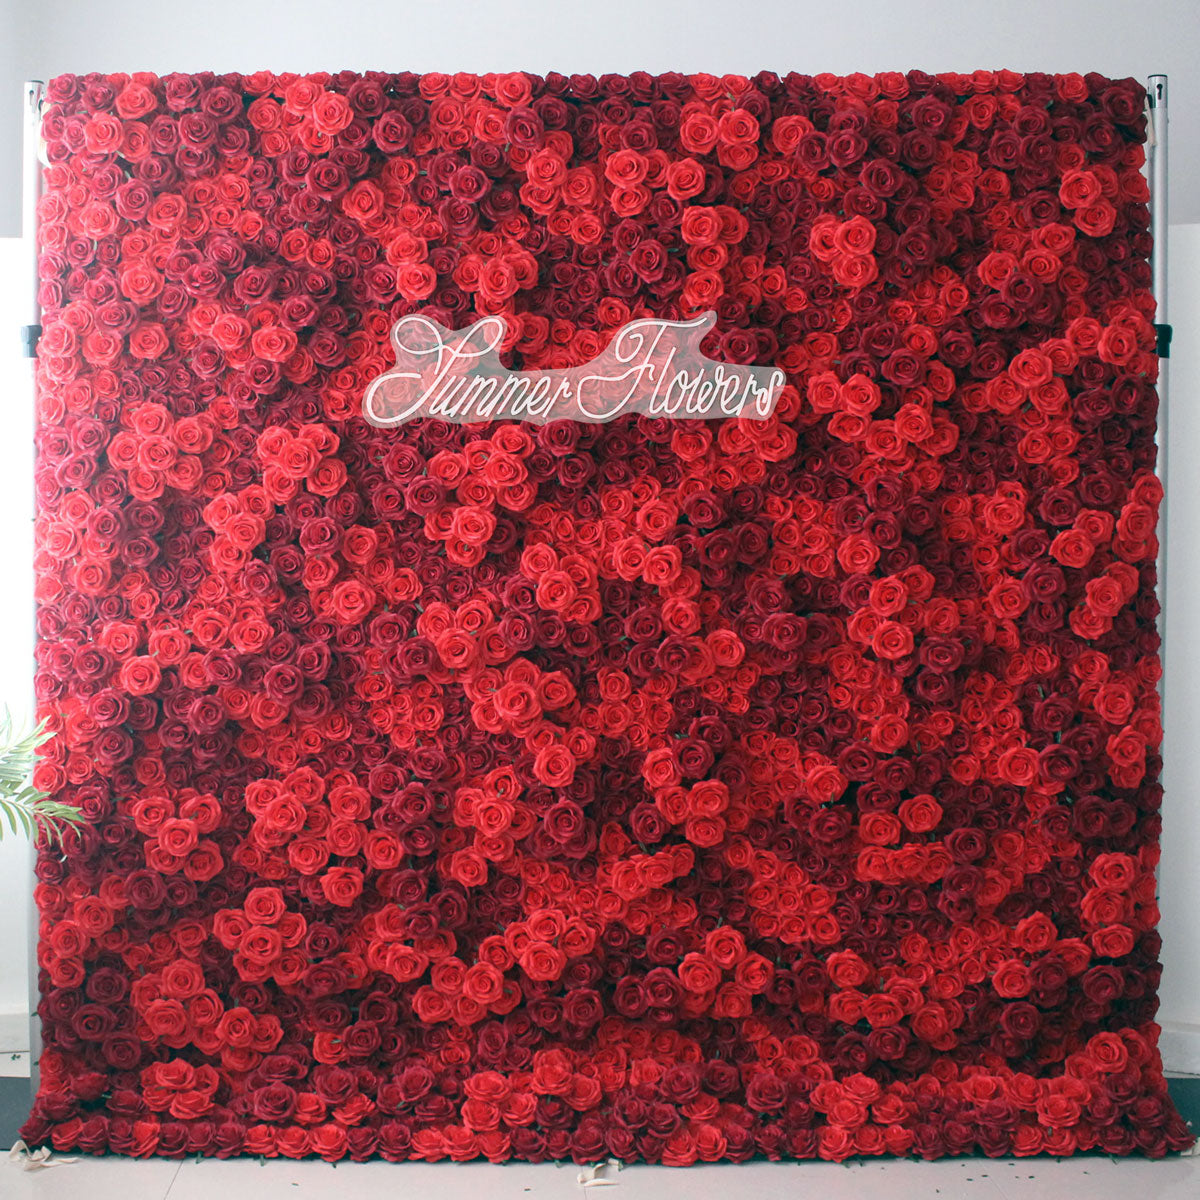 Summer Flower:CB-172 8ft*8ft Cloth Back Artificial Flower Wall Backdrop